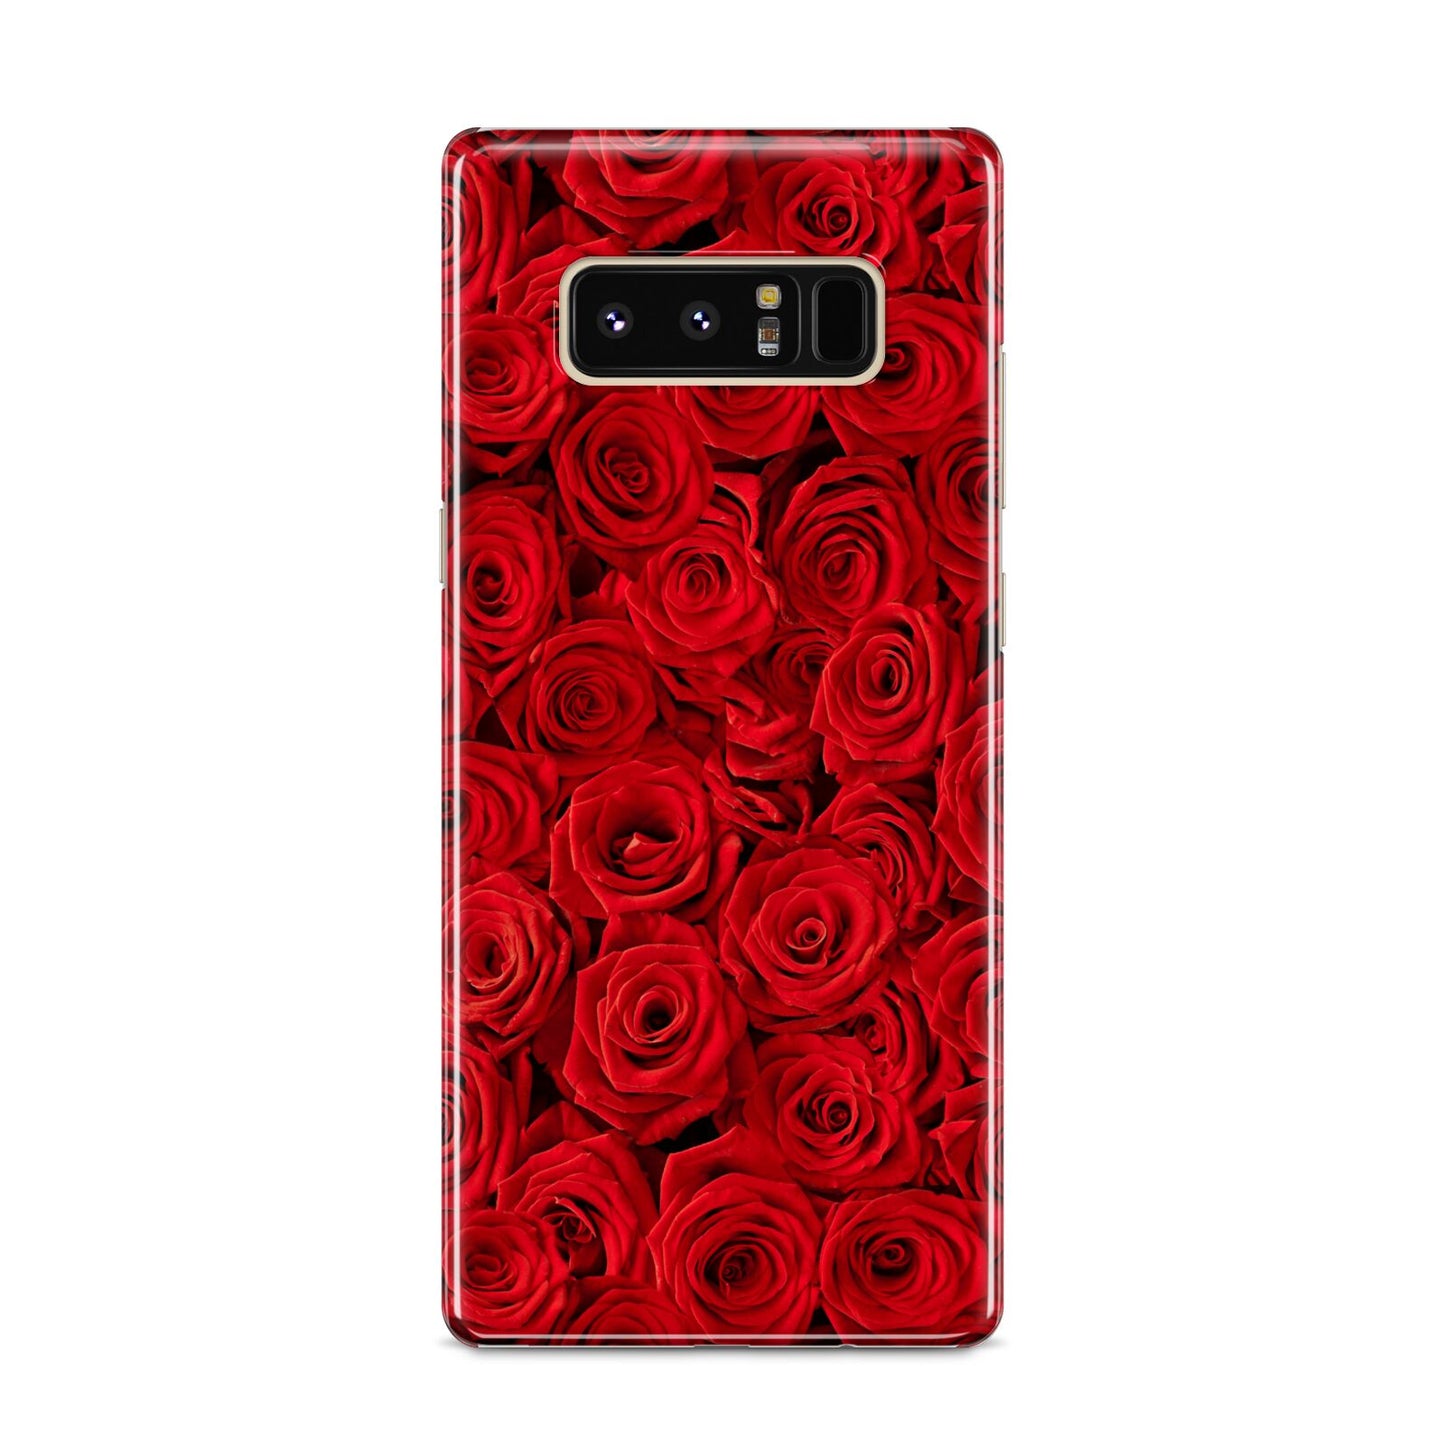 Red Rose Samsung Galaxy S8 Case